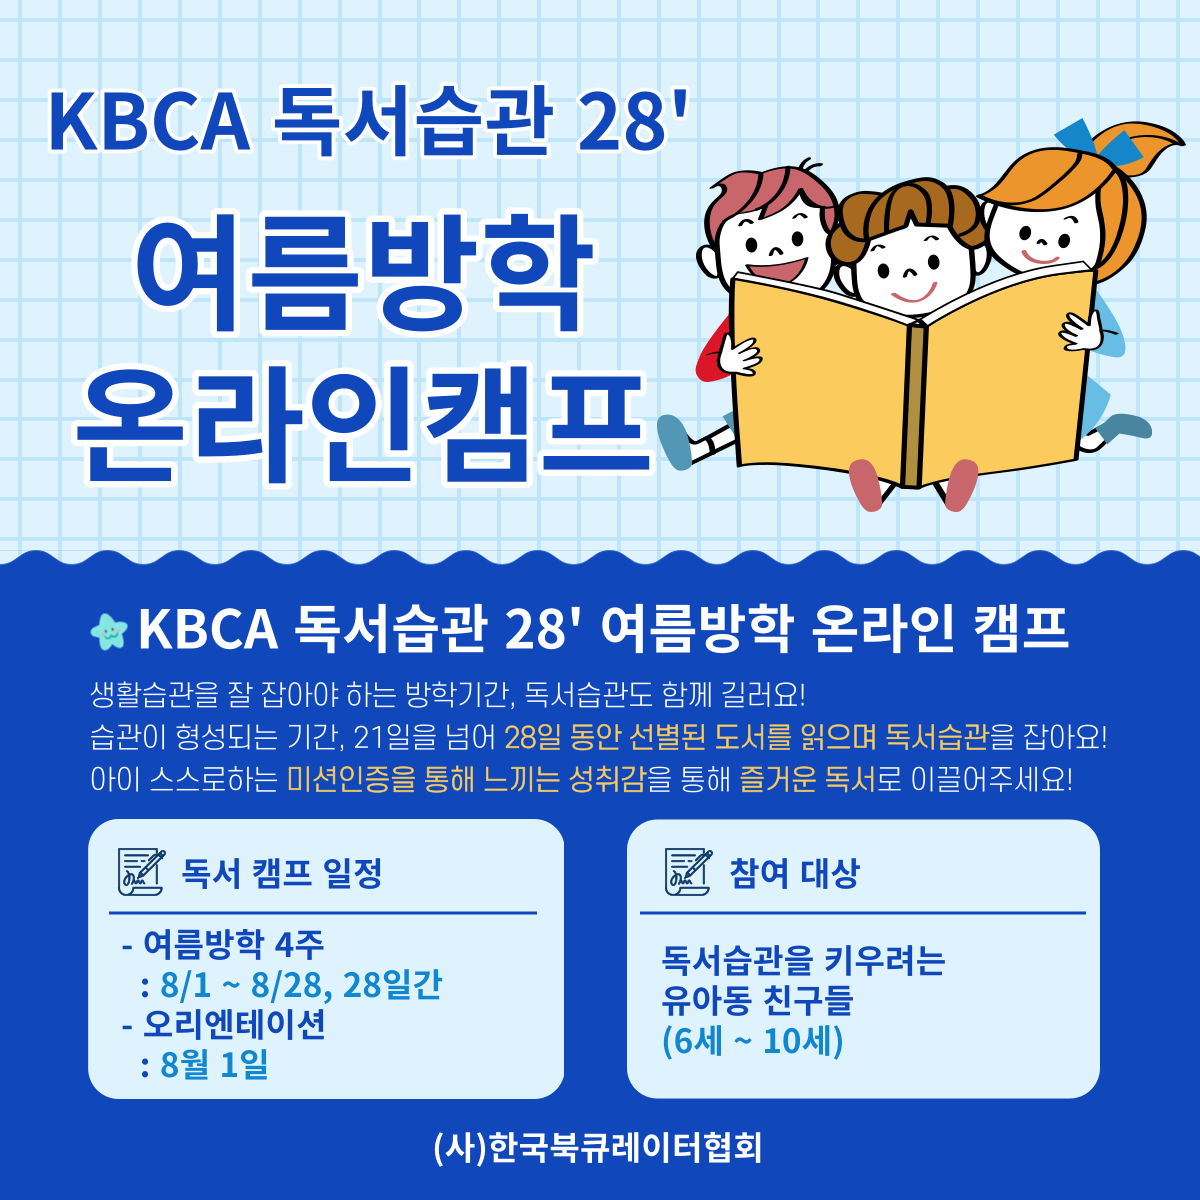 KBCA 독서습관 28’ 여름방학 온라인 캠프